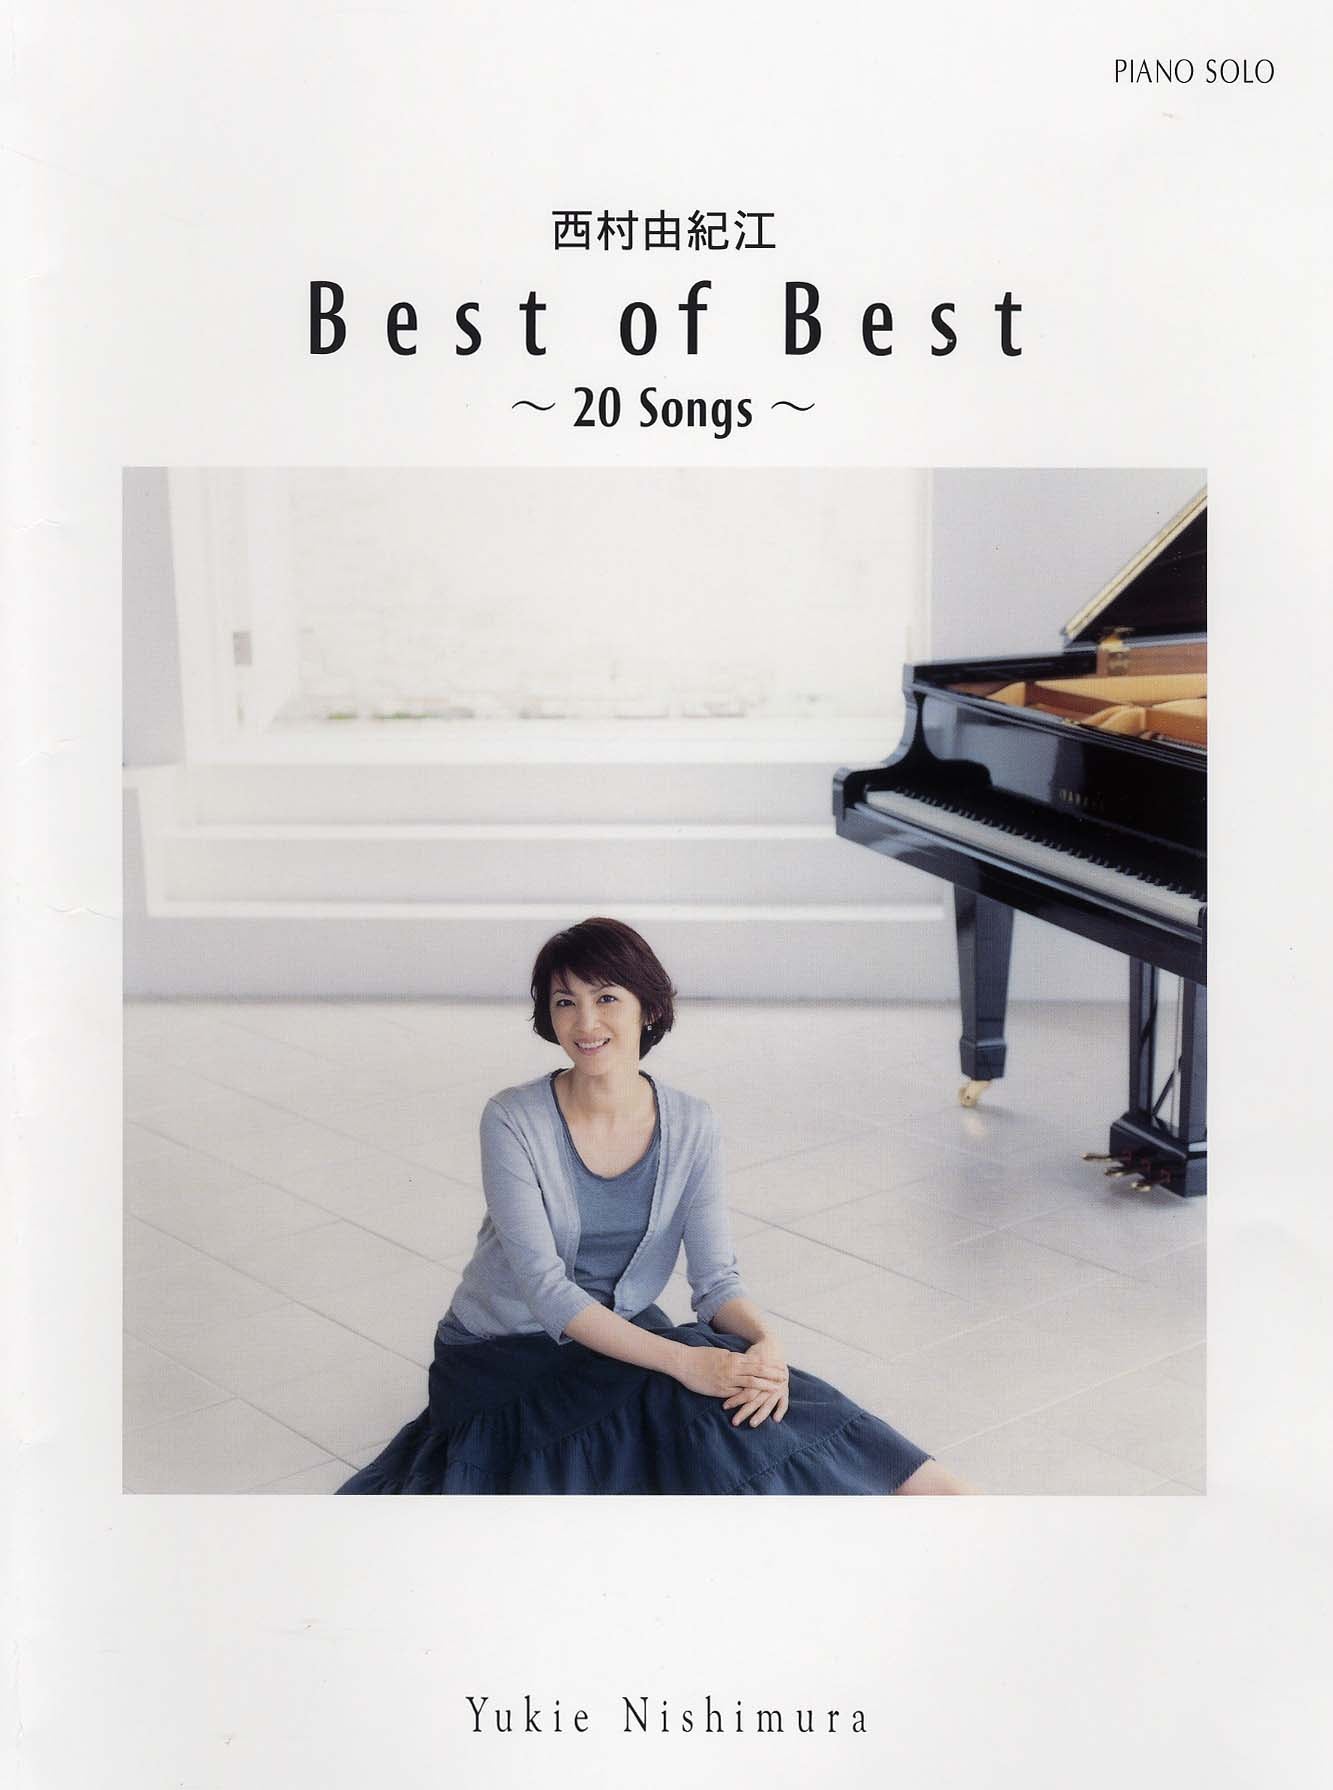 Yukie Nishimura - Best of Best - 20 songs - Piano Solo Sheet Music Book